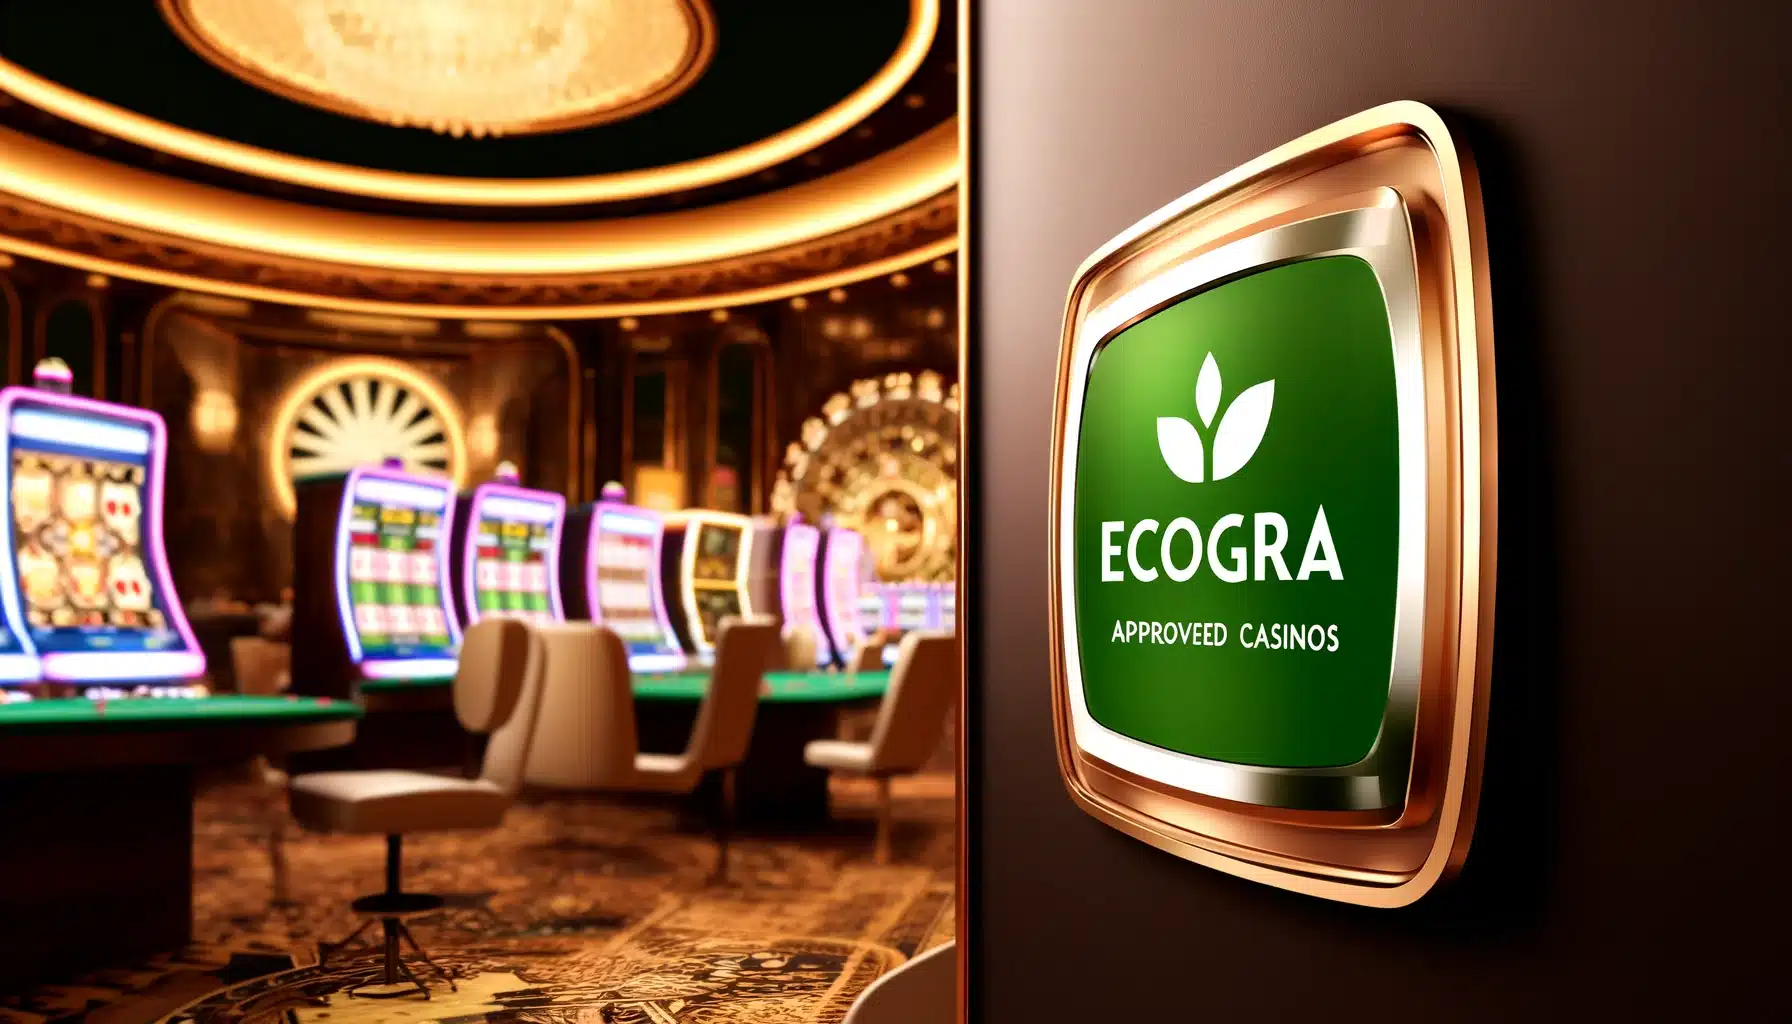 eCogra casinos